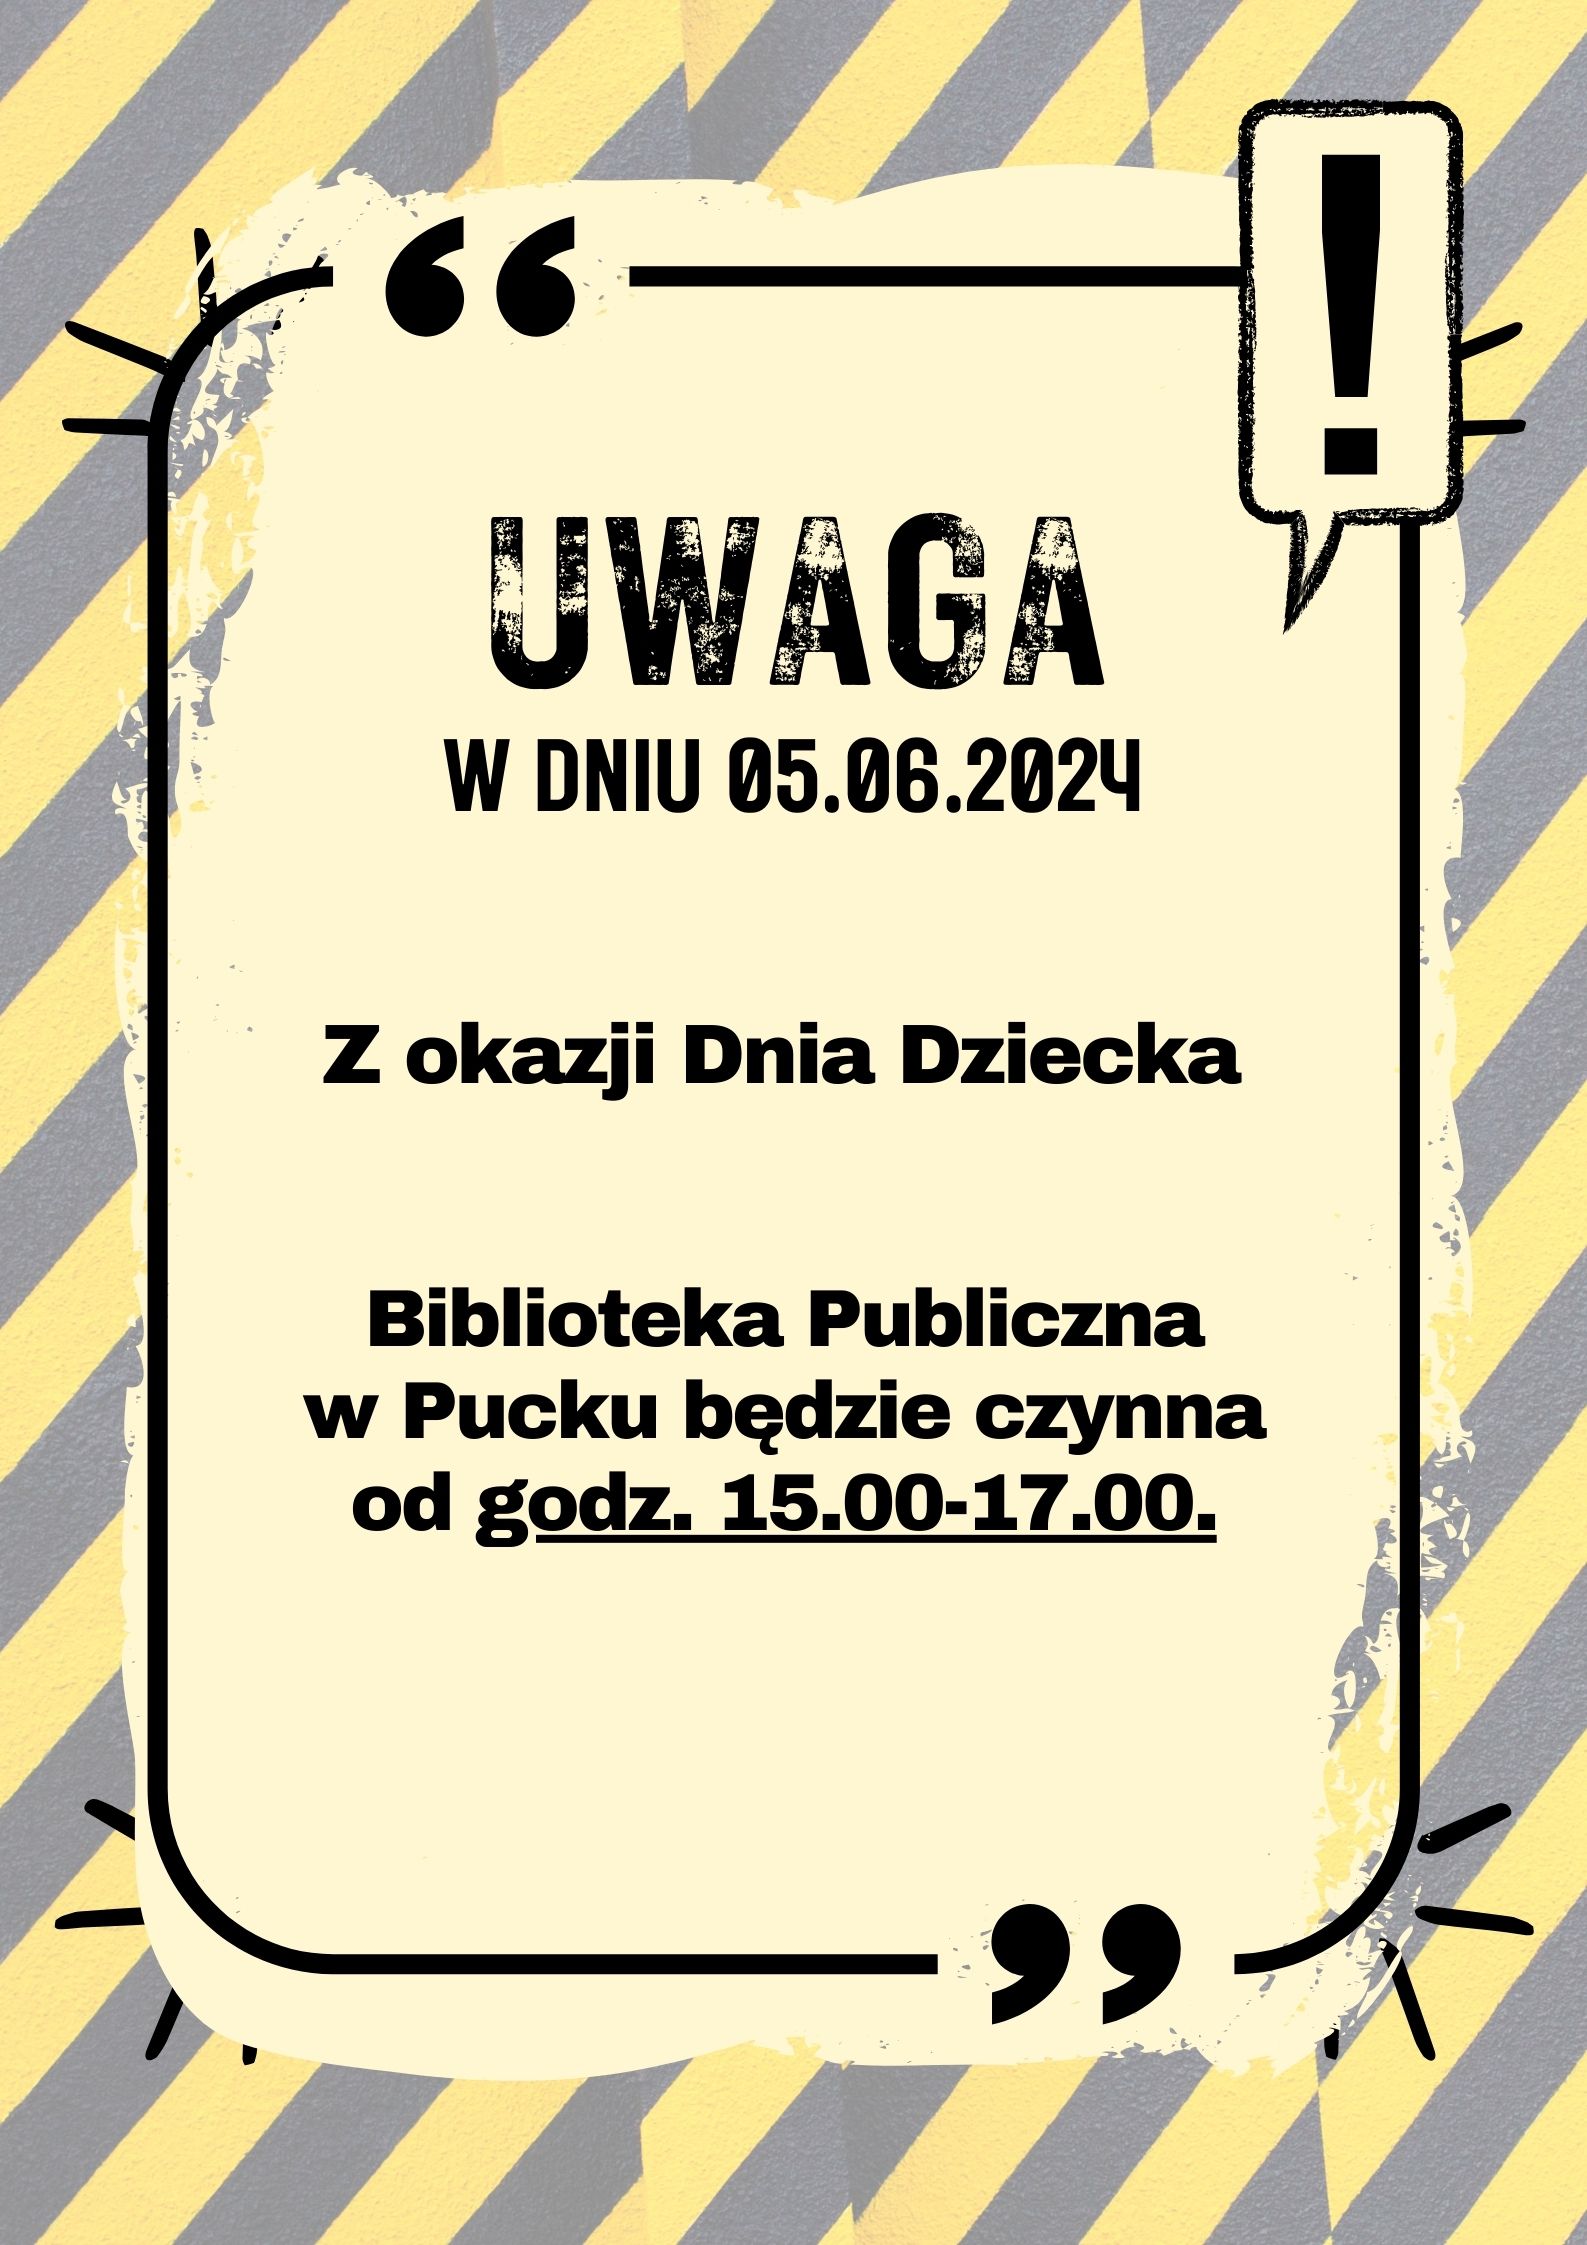 UWaga 05.06